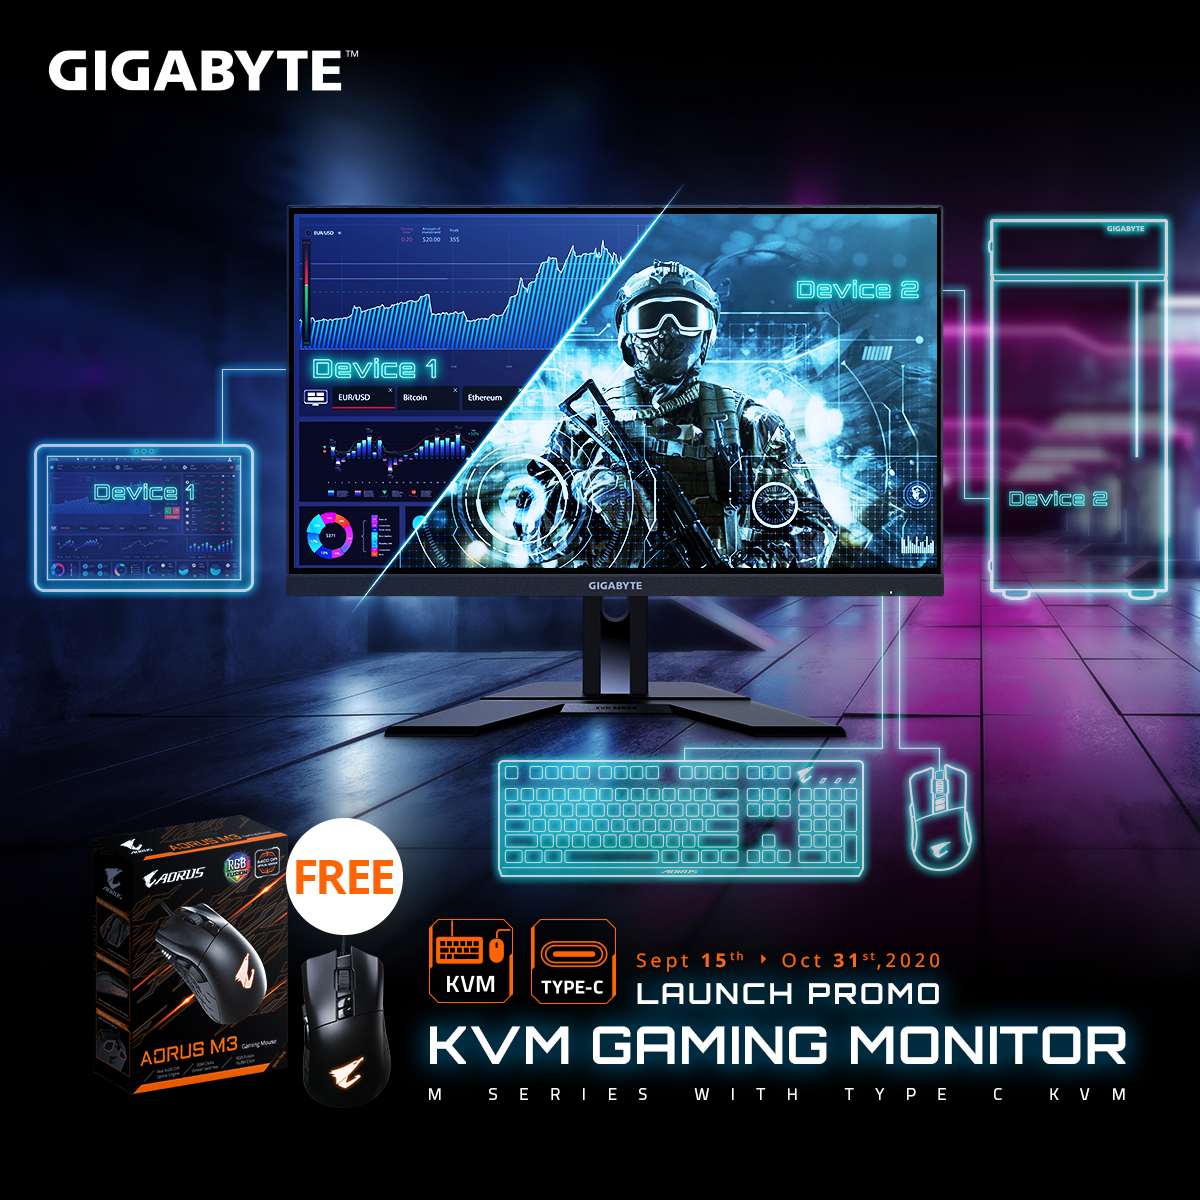 [MY] GIGABYTE M-Series Monitor Promo